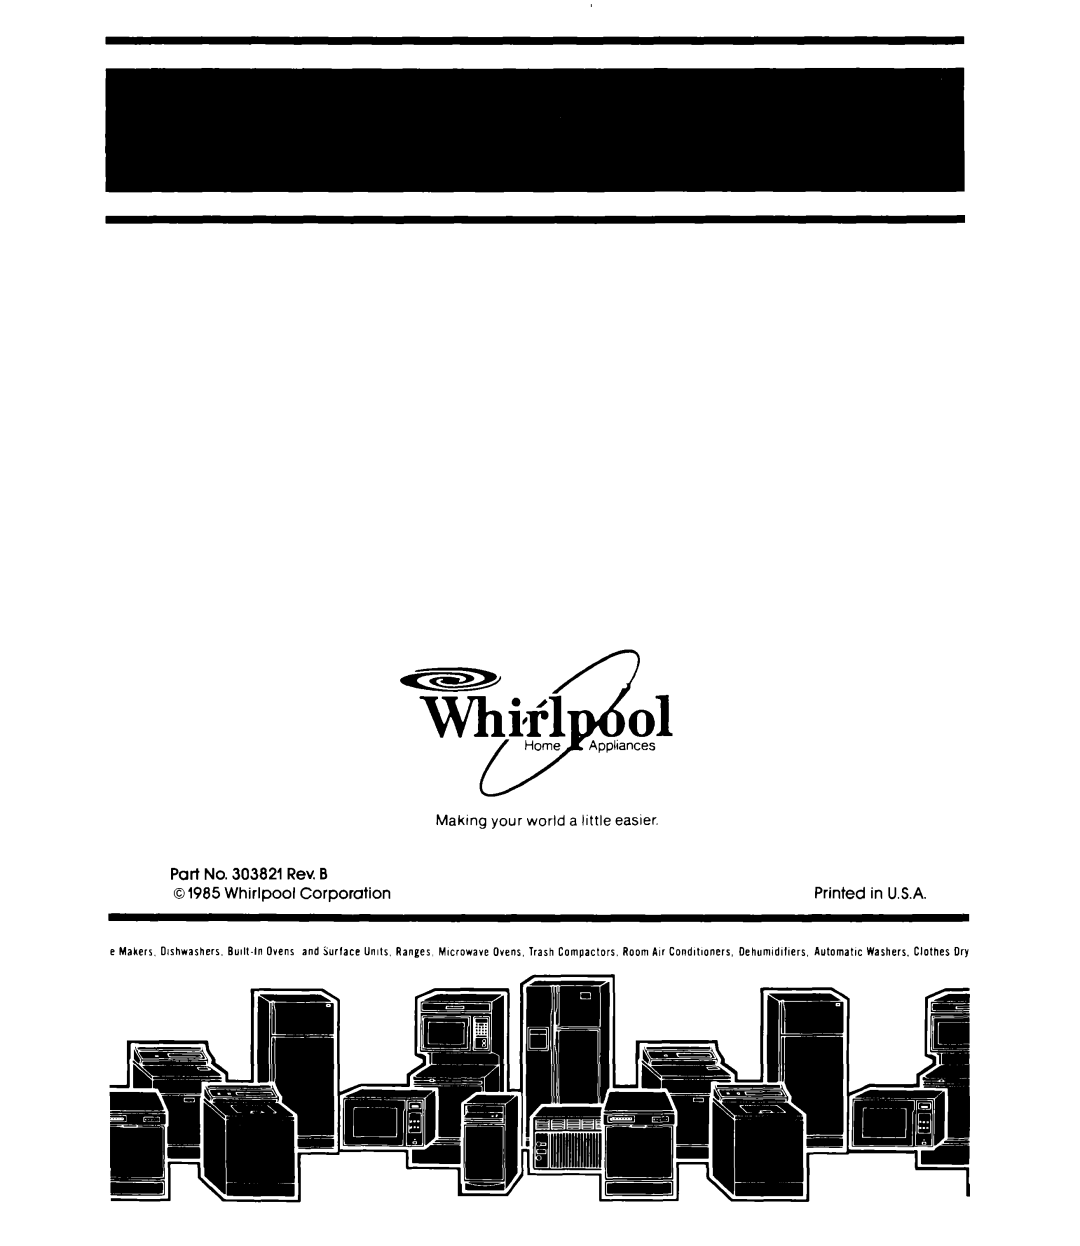 Whirlpool DU5004XM, DP6881XL manual Part No. 303821 Rev. B, 0 1985 Whirlpool Corporation, Making your world a little easier 